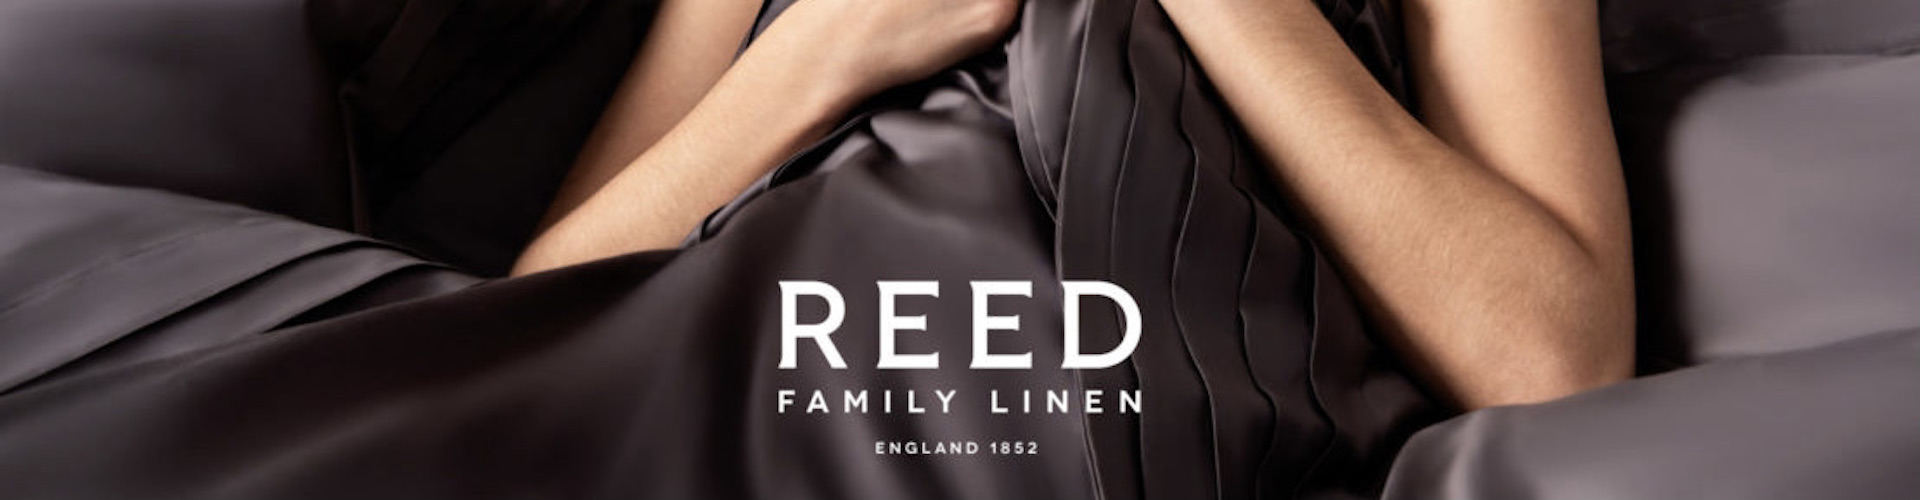 Reed Family Linen